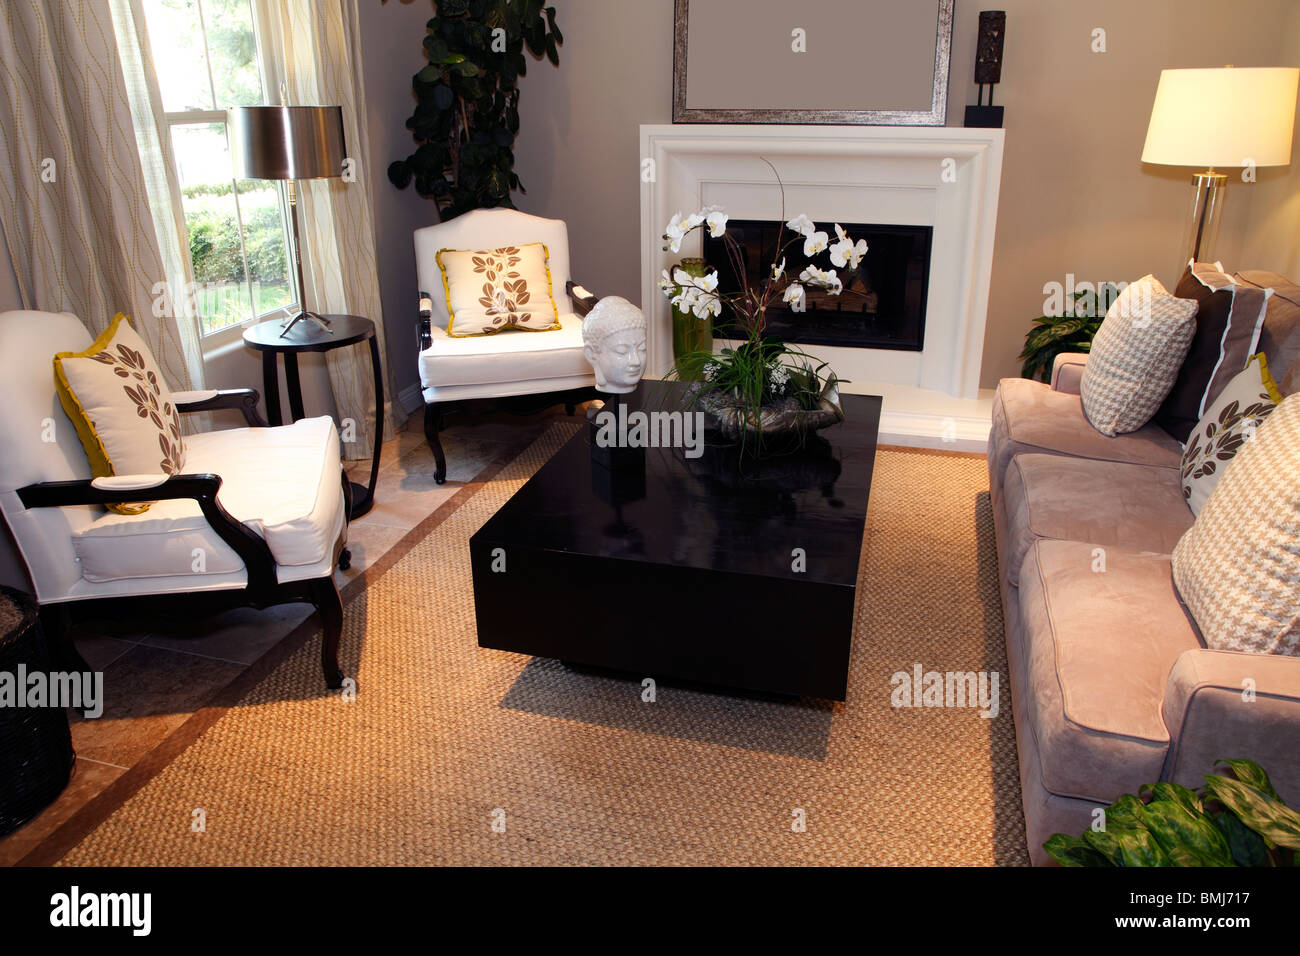 Luxury home living room with stylish interior design. Stock Photo